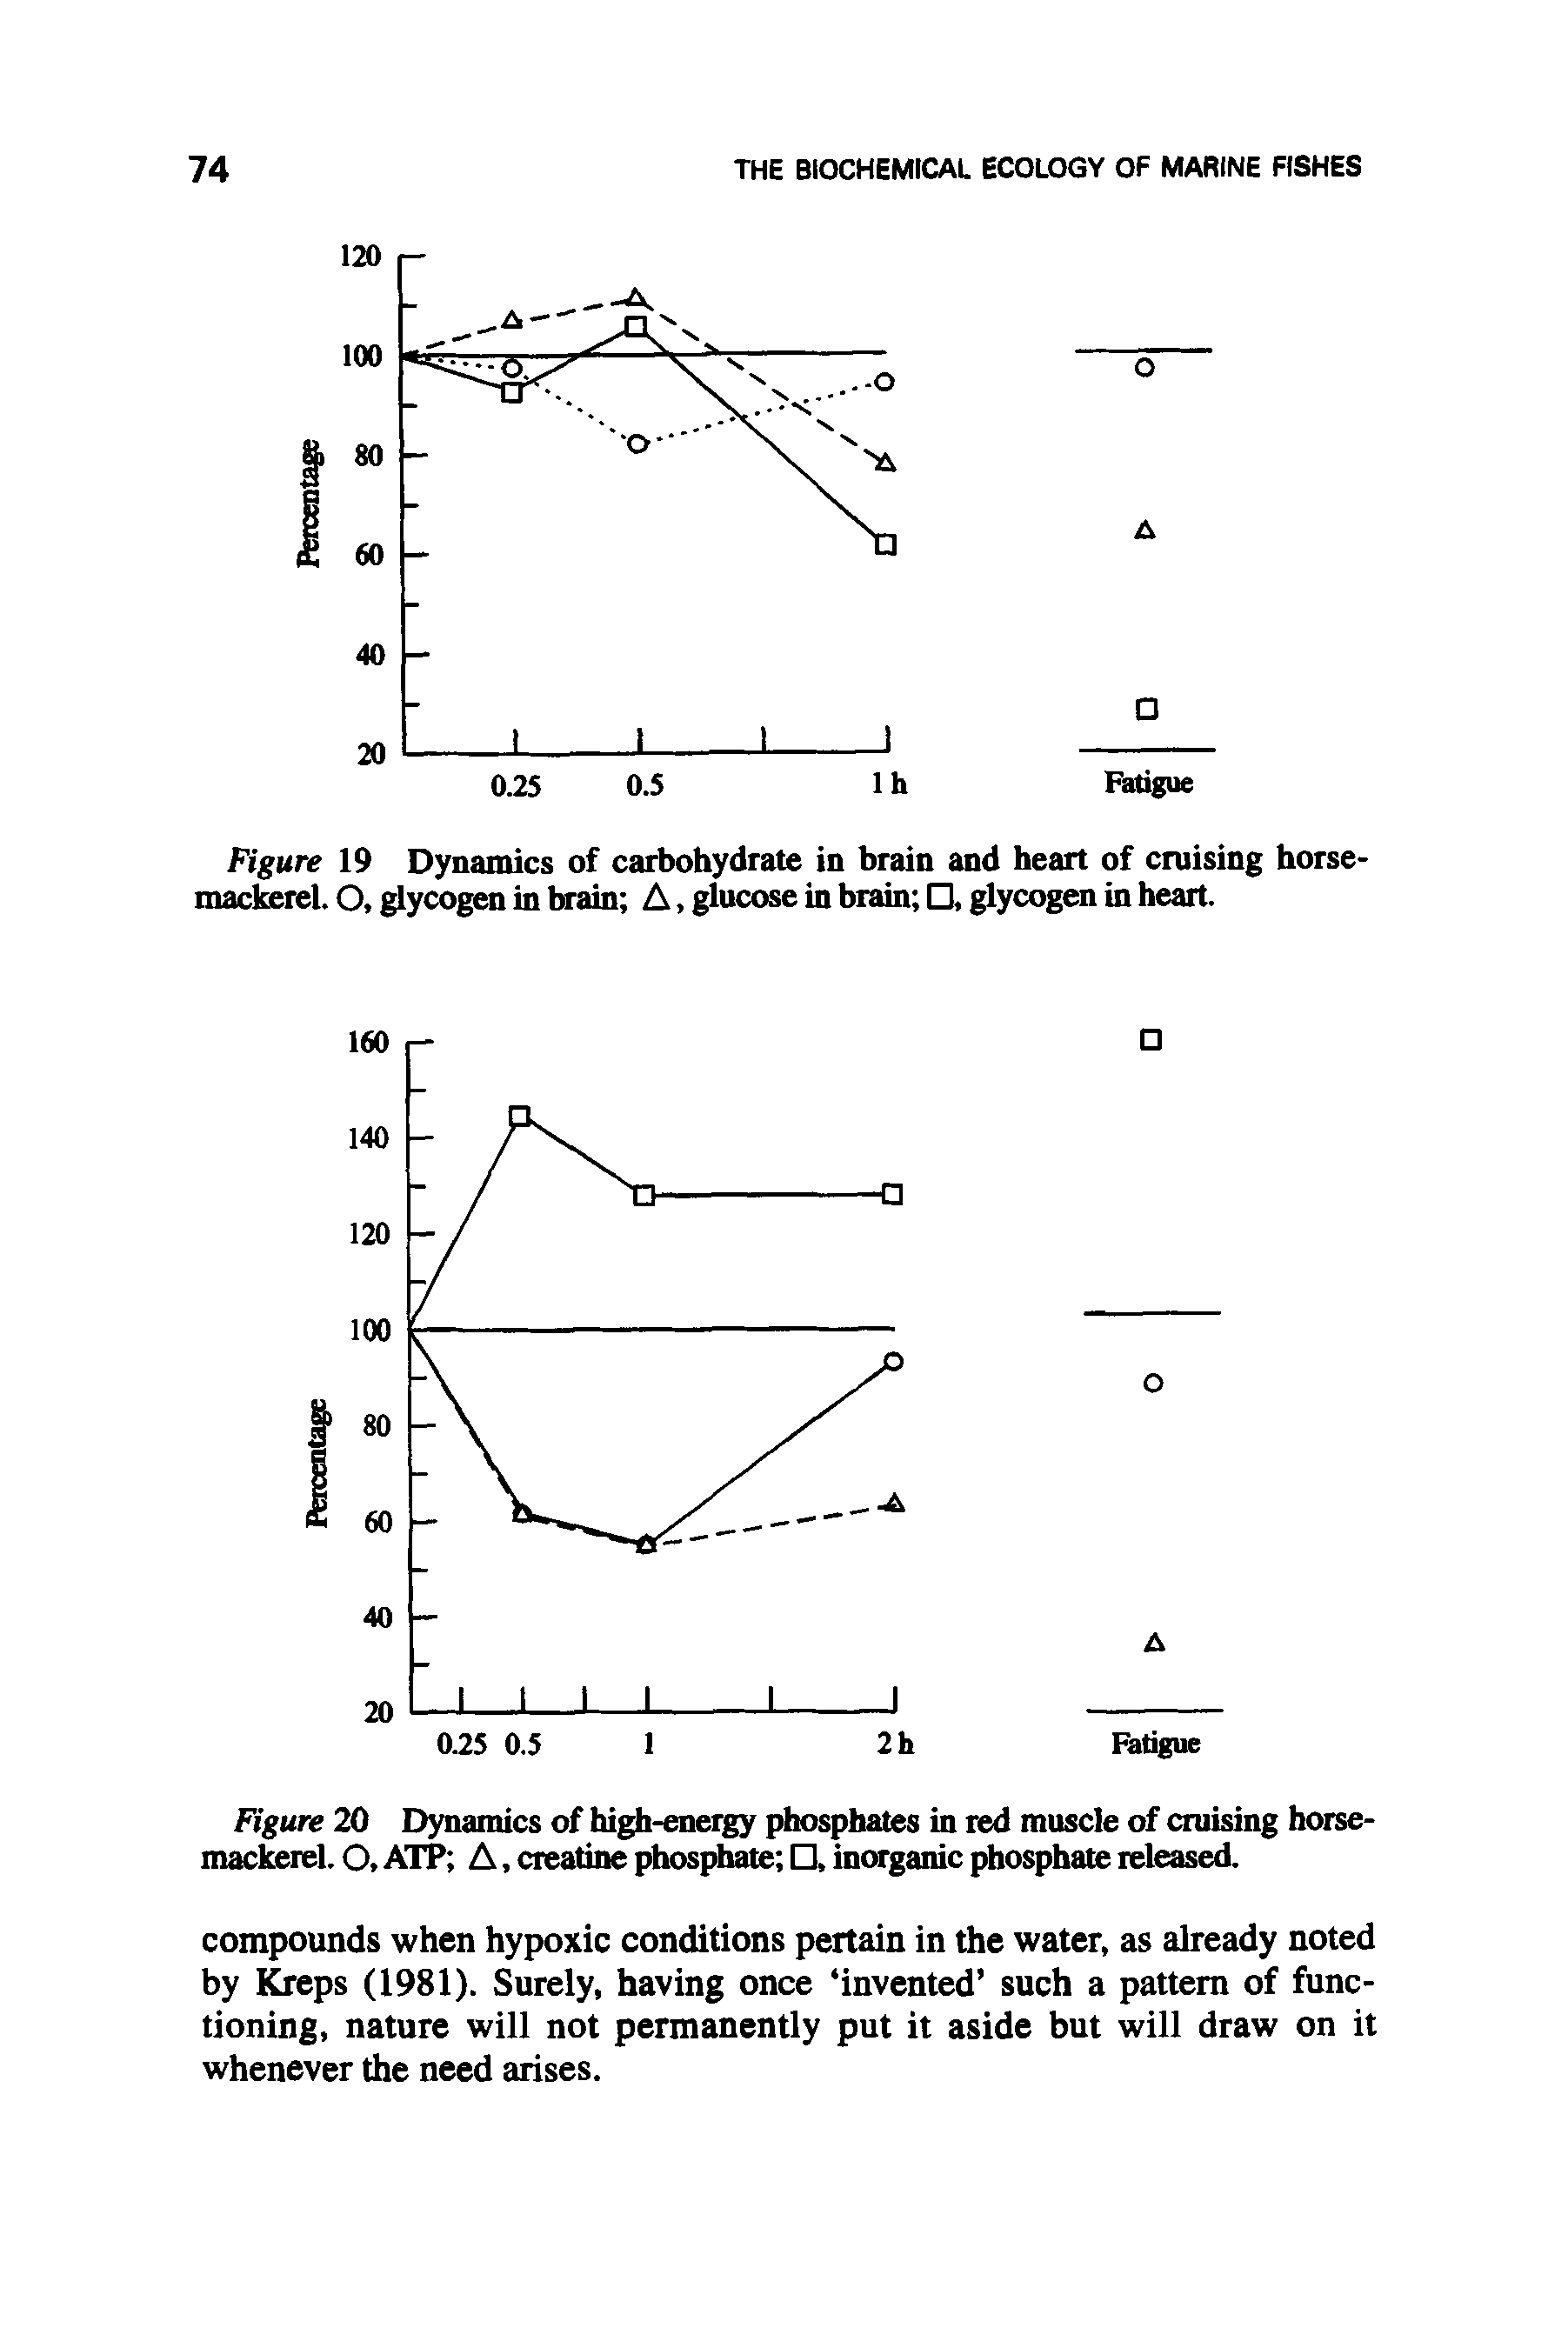 Figure 20 Dynamics of high-energy phosphates in red muscle of cruising horse-mackerel. O, ATP A, creatine phosphate , inorganic phosphate released.